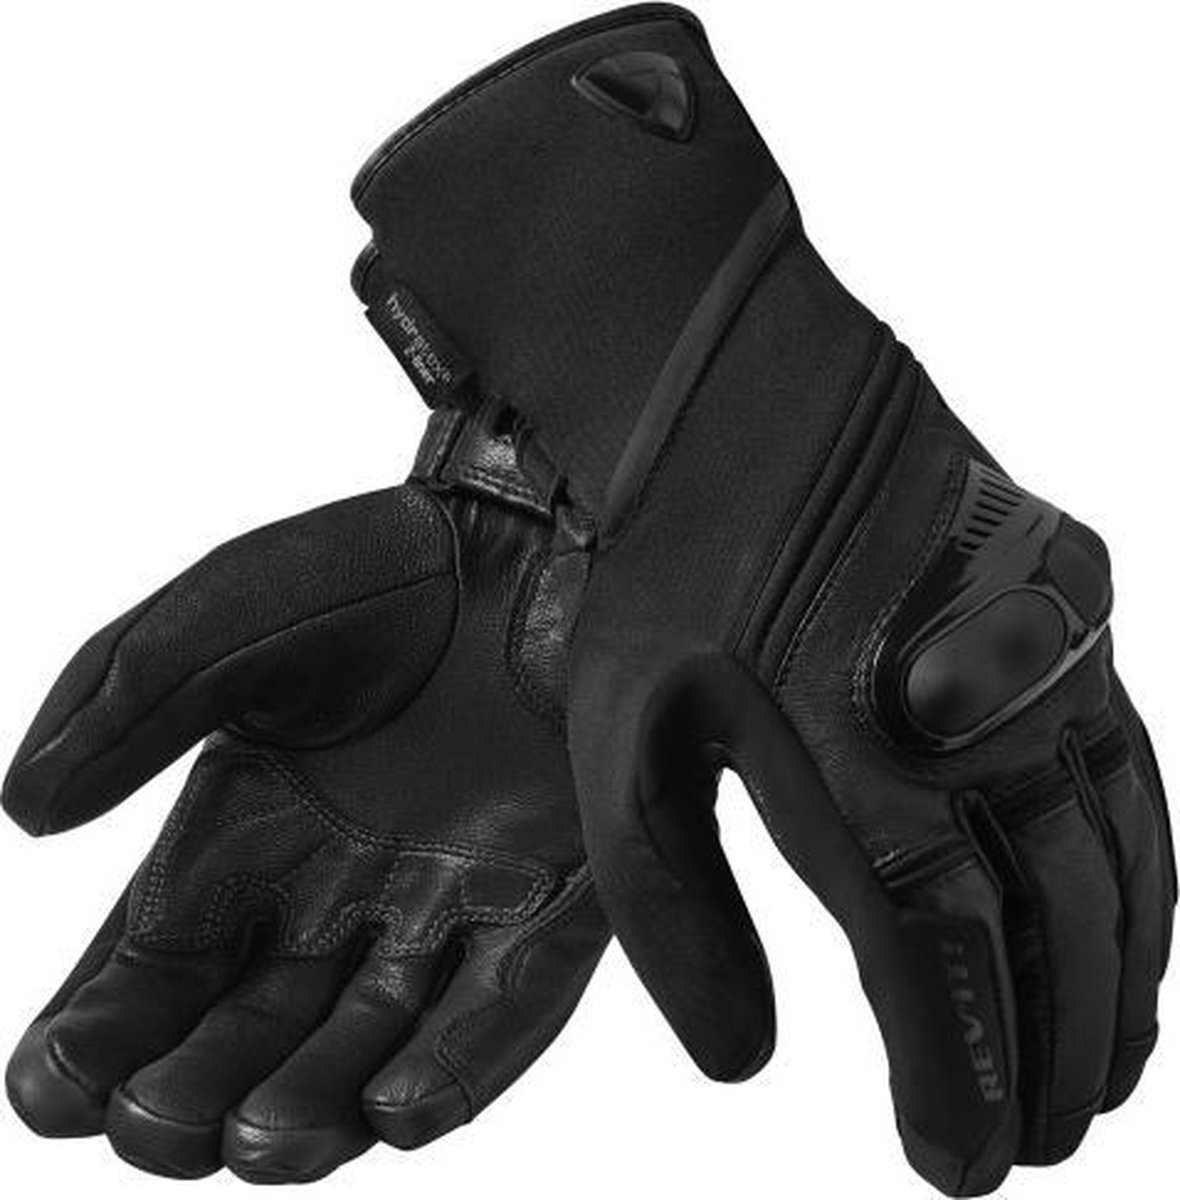 REV'IT! Sirius 2 H2O Black Motorcycle Gloves S